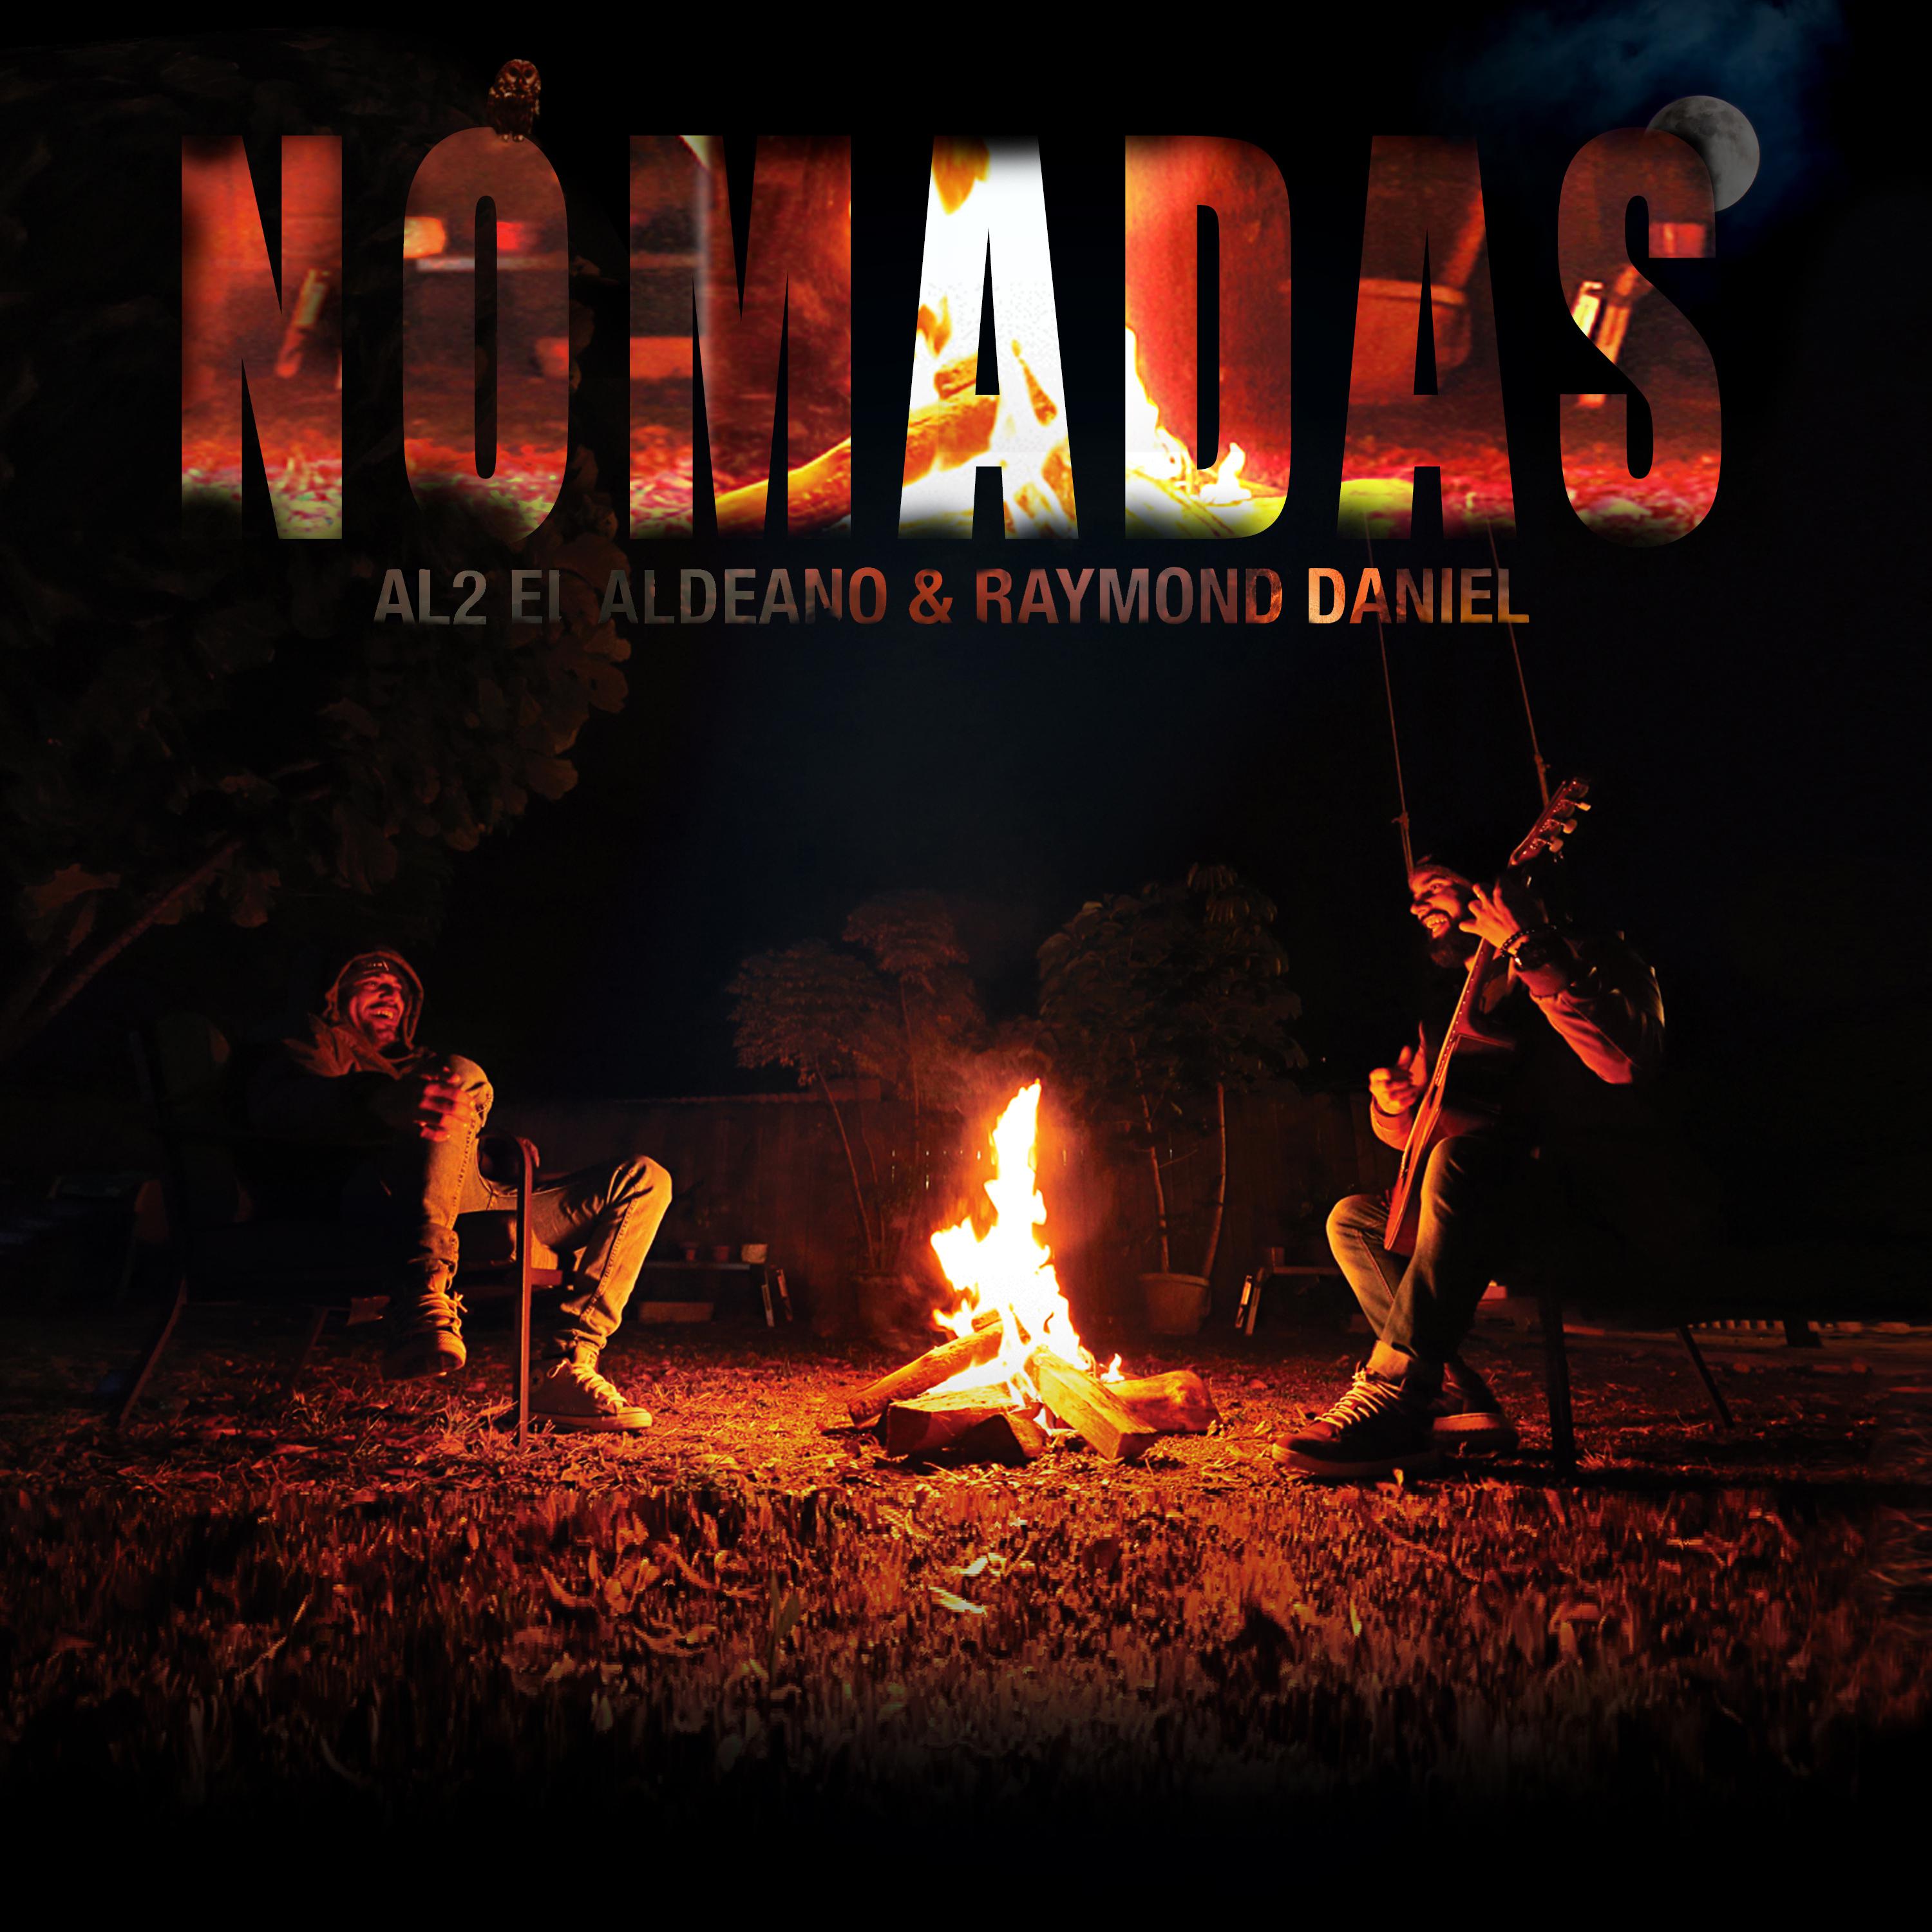 Постер альбома Nómadas